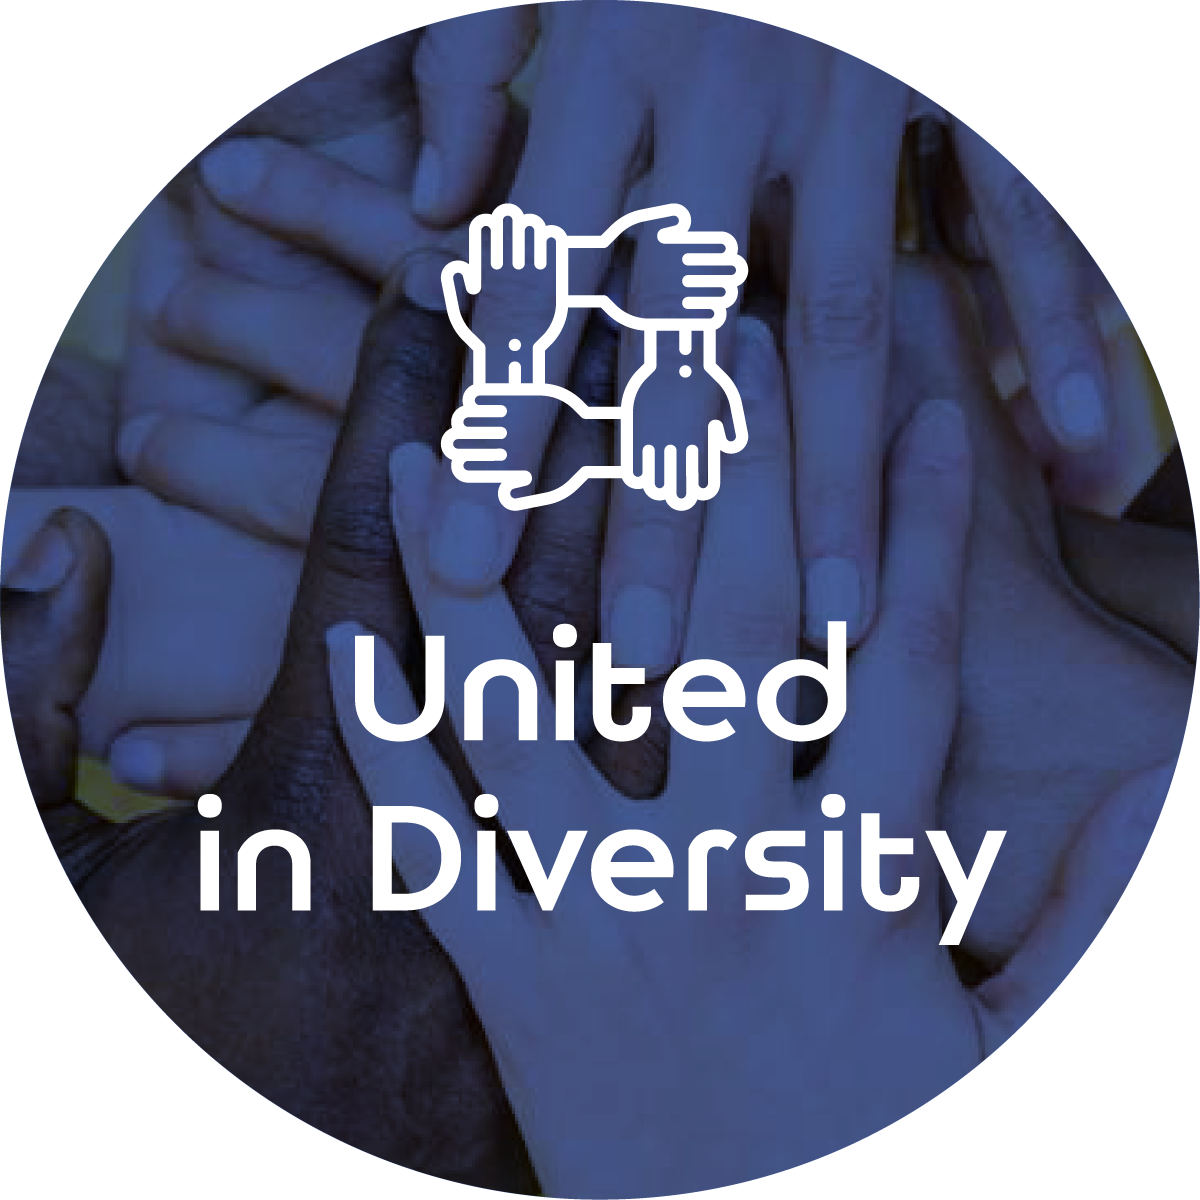 United in Diversity